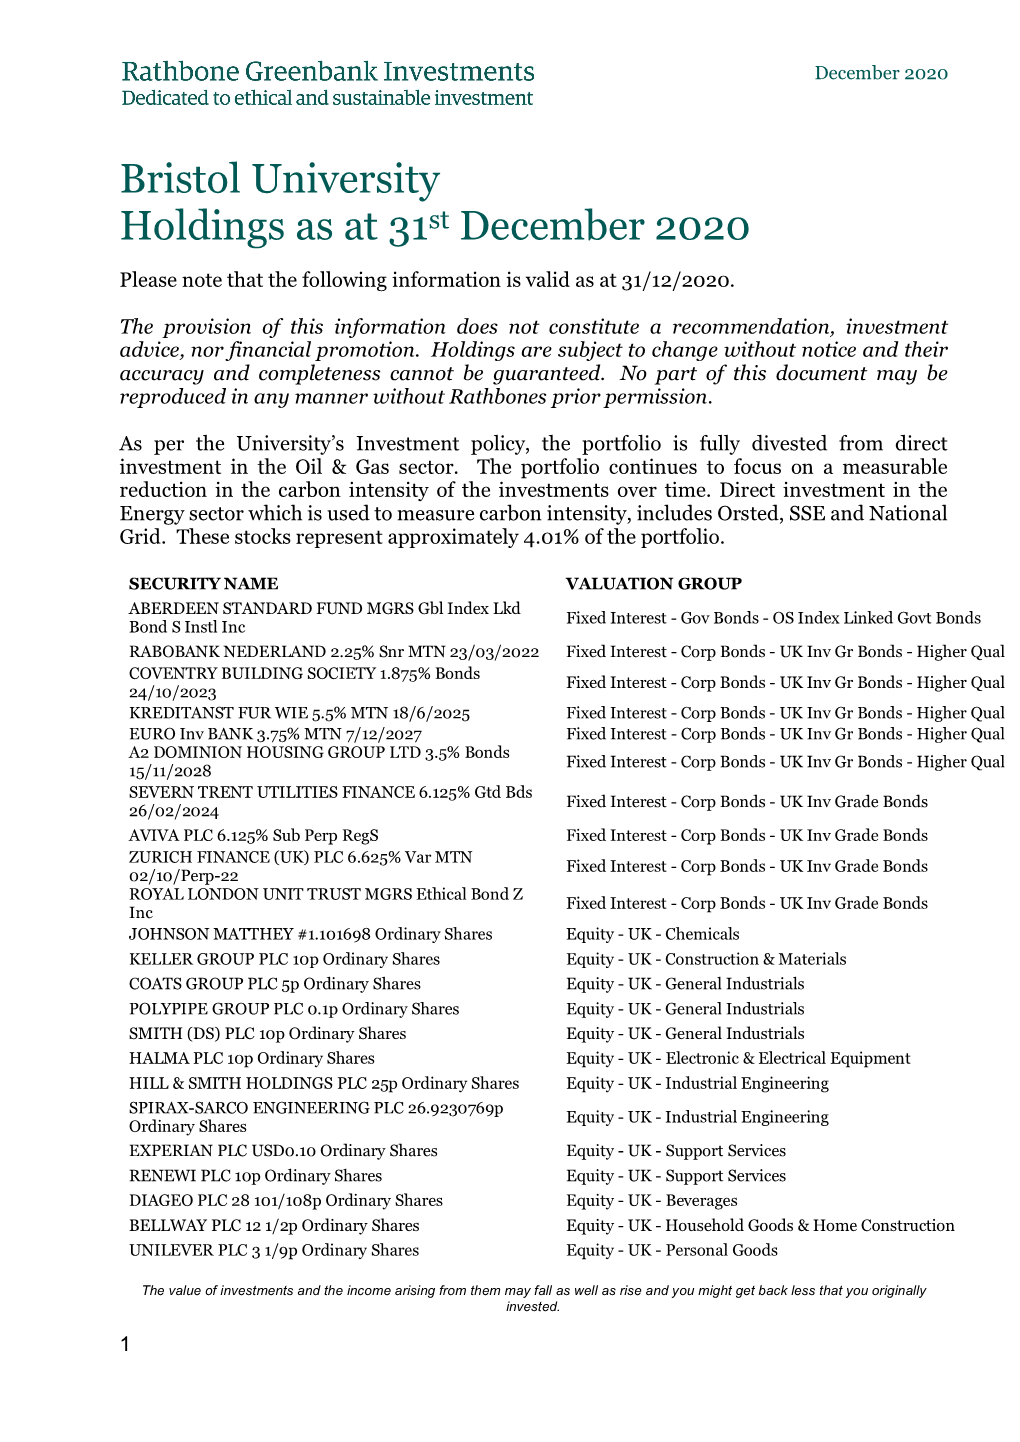 Bristol University Holdings As at 31St December 2020